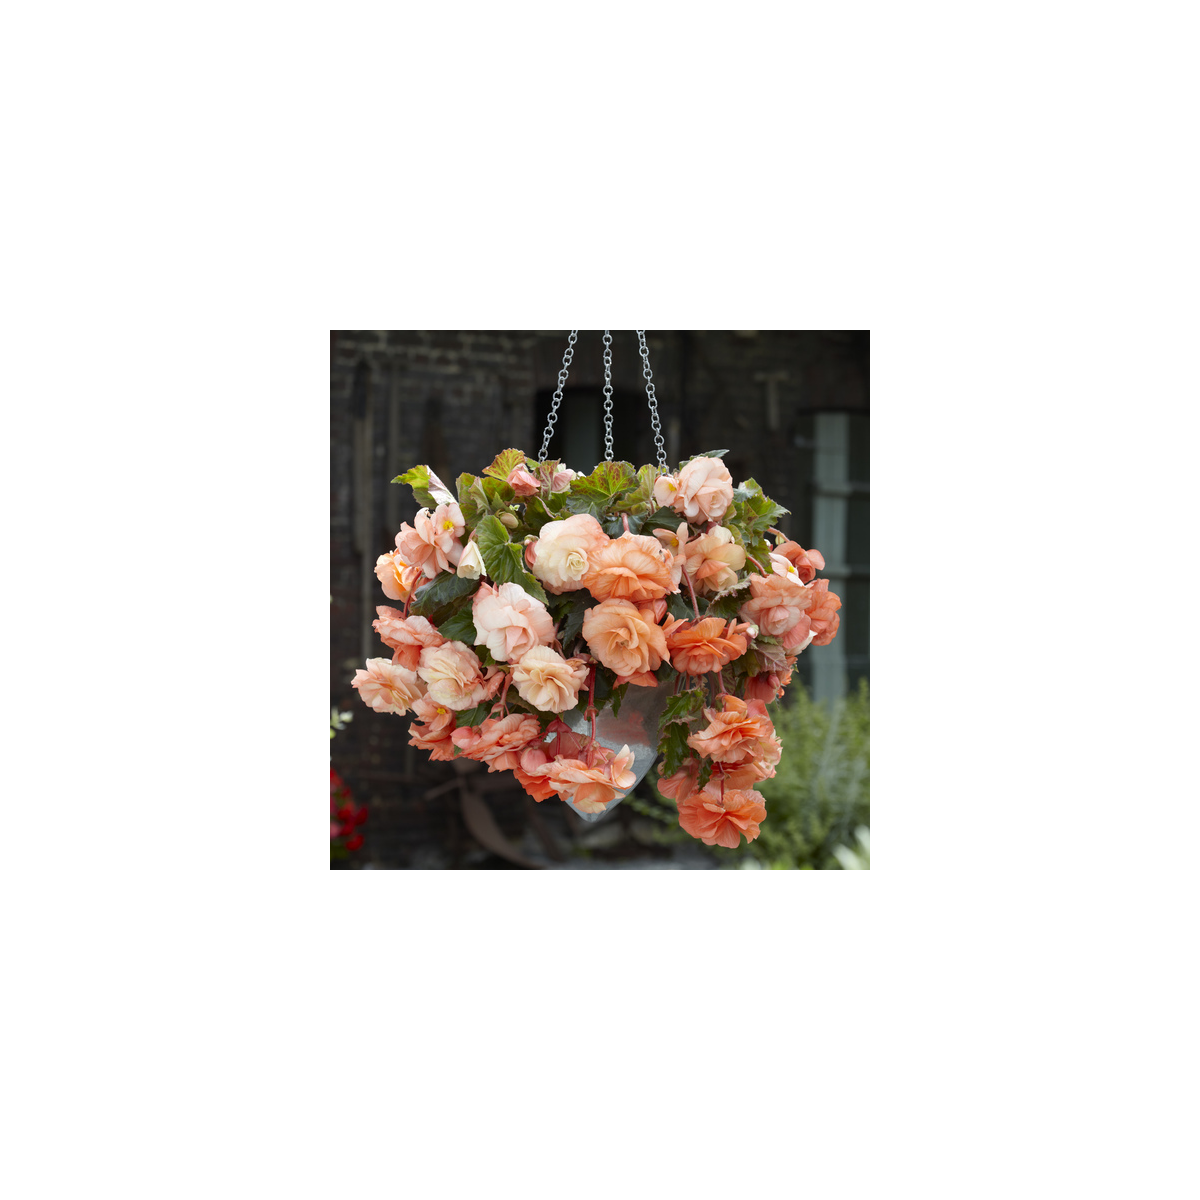 Begonie Apricot - Begonia splendide - hlízy begonie - 2 ks